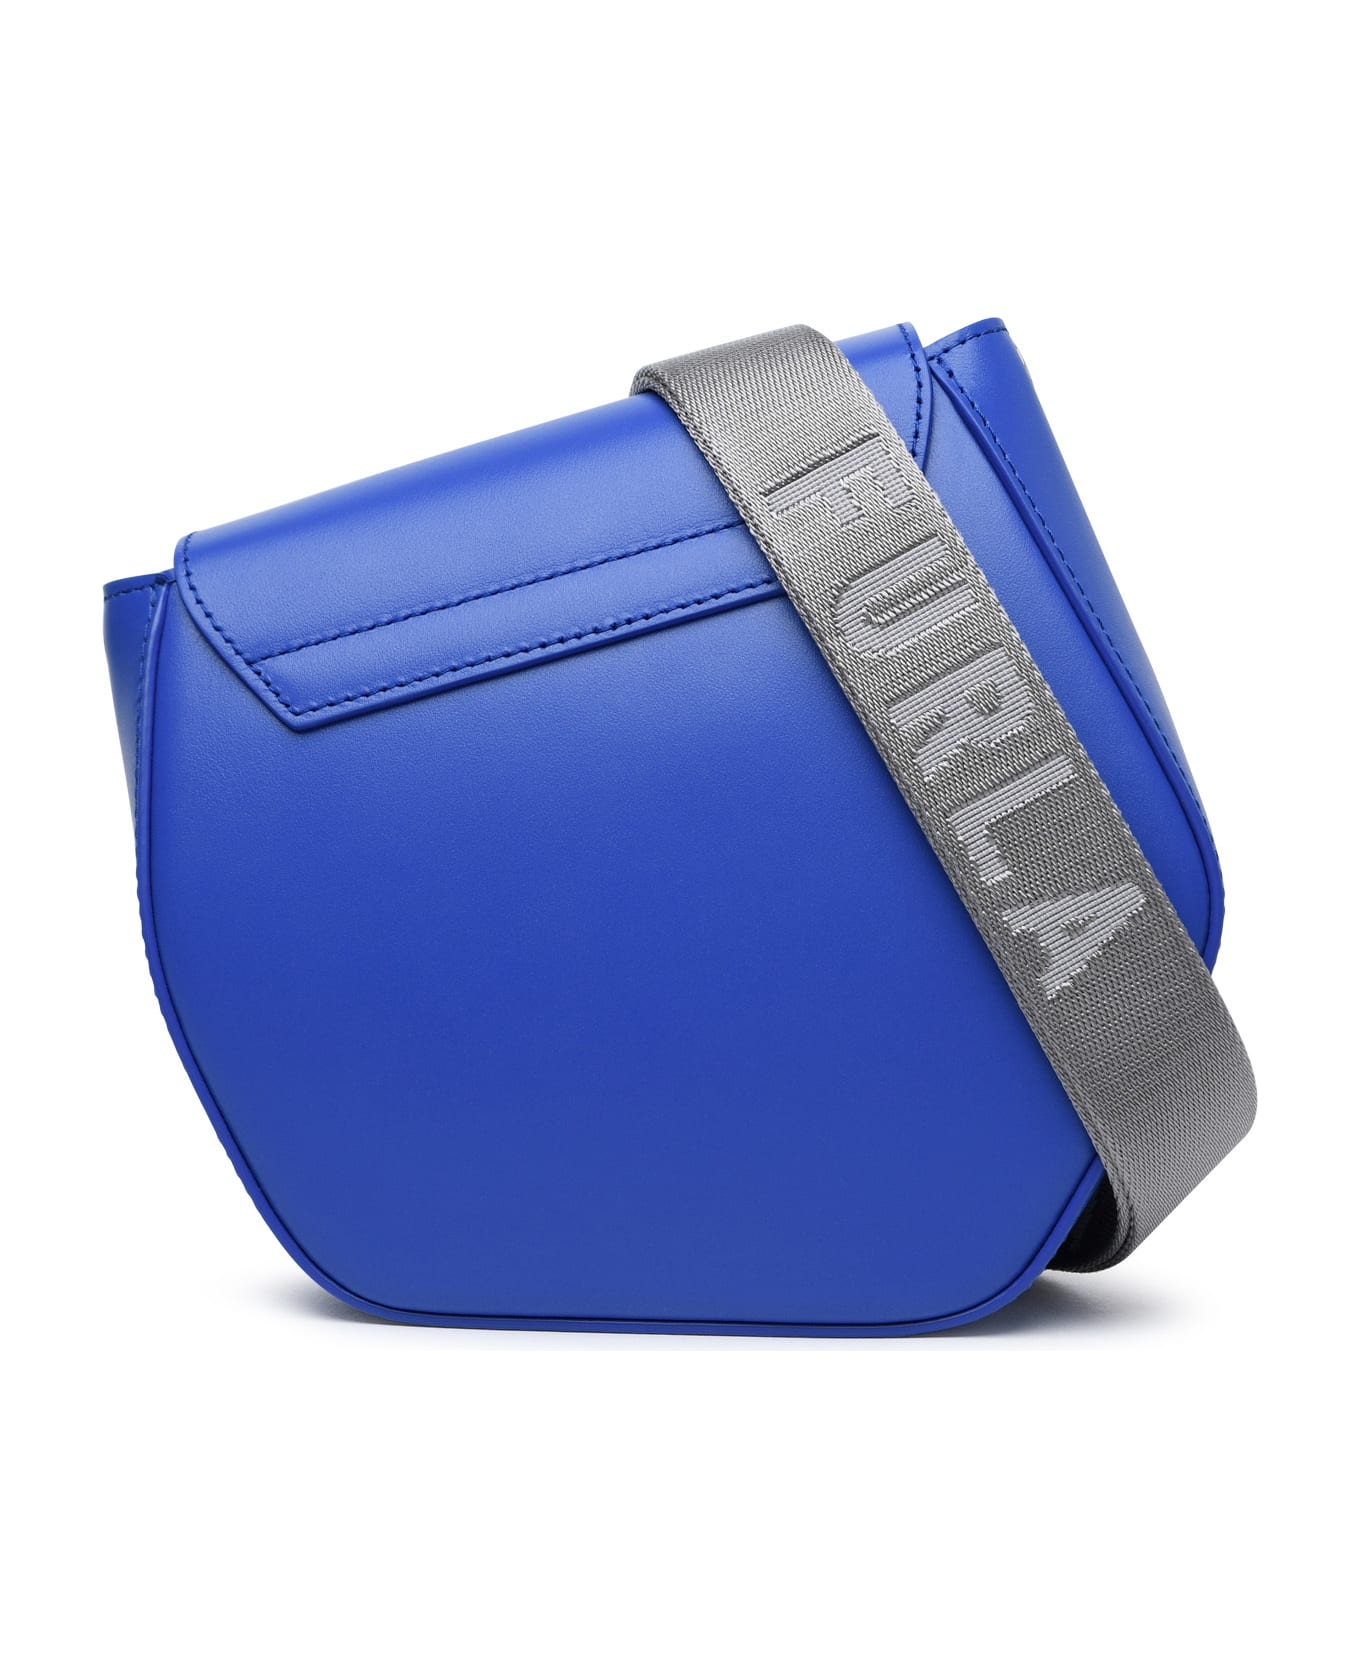 Furla 'metropolis Prisma' Blue Leather Blend Bag - S Blu Cobalto